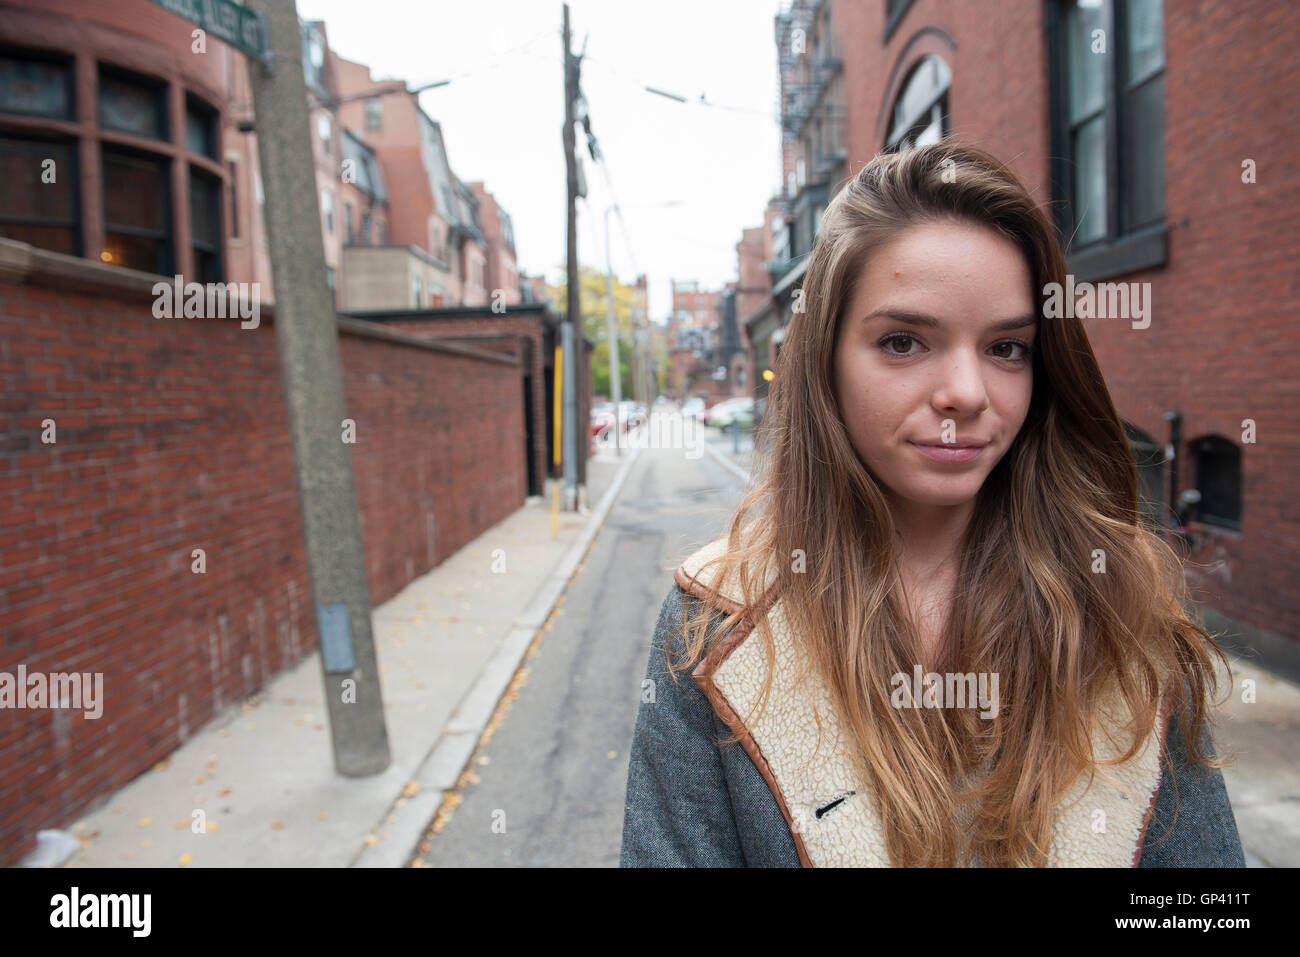 Teenage girl standing in alley, portrait Stock Photo